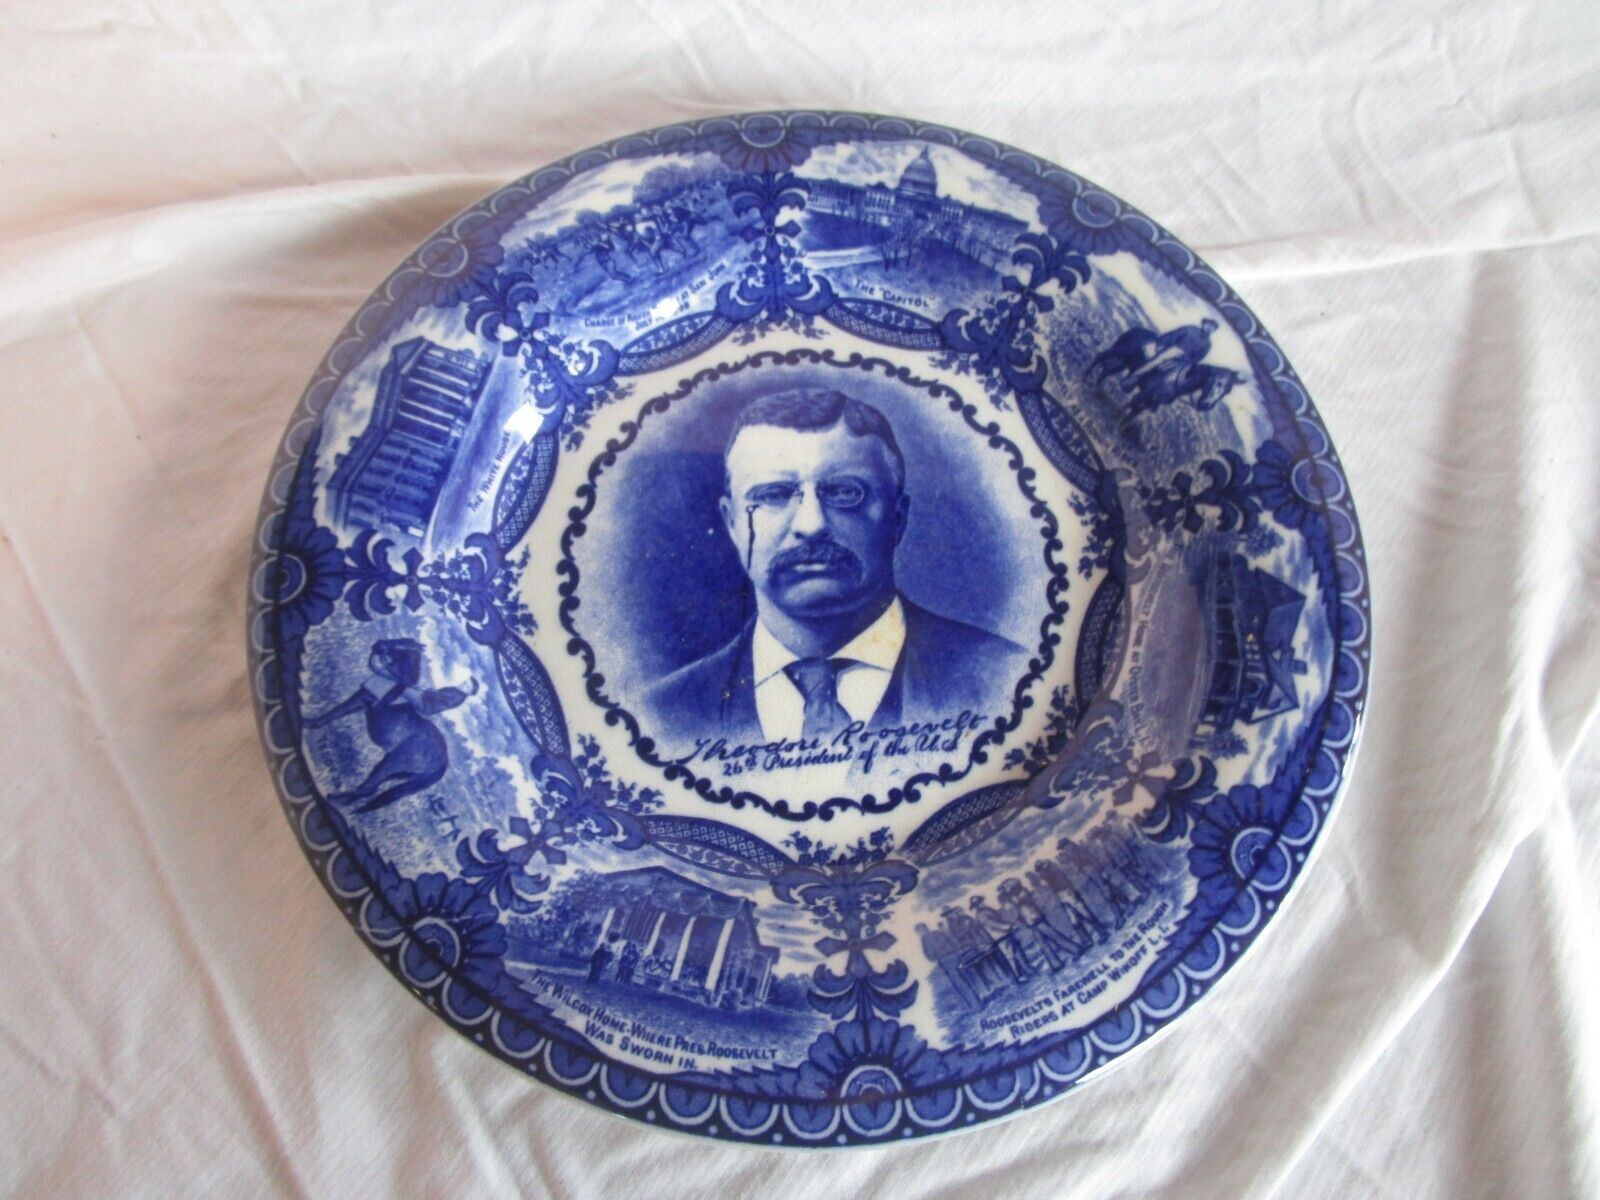 C 1900 Antique Staffordshire Plate Teddy Roosevelt Flow Blue